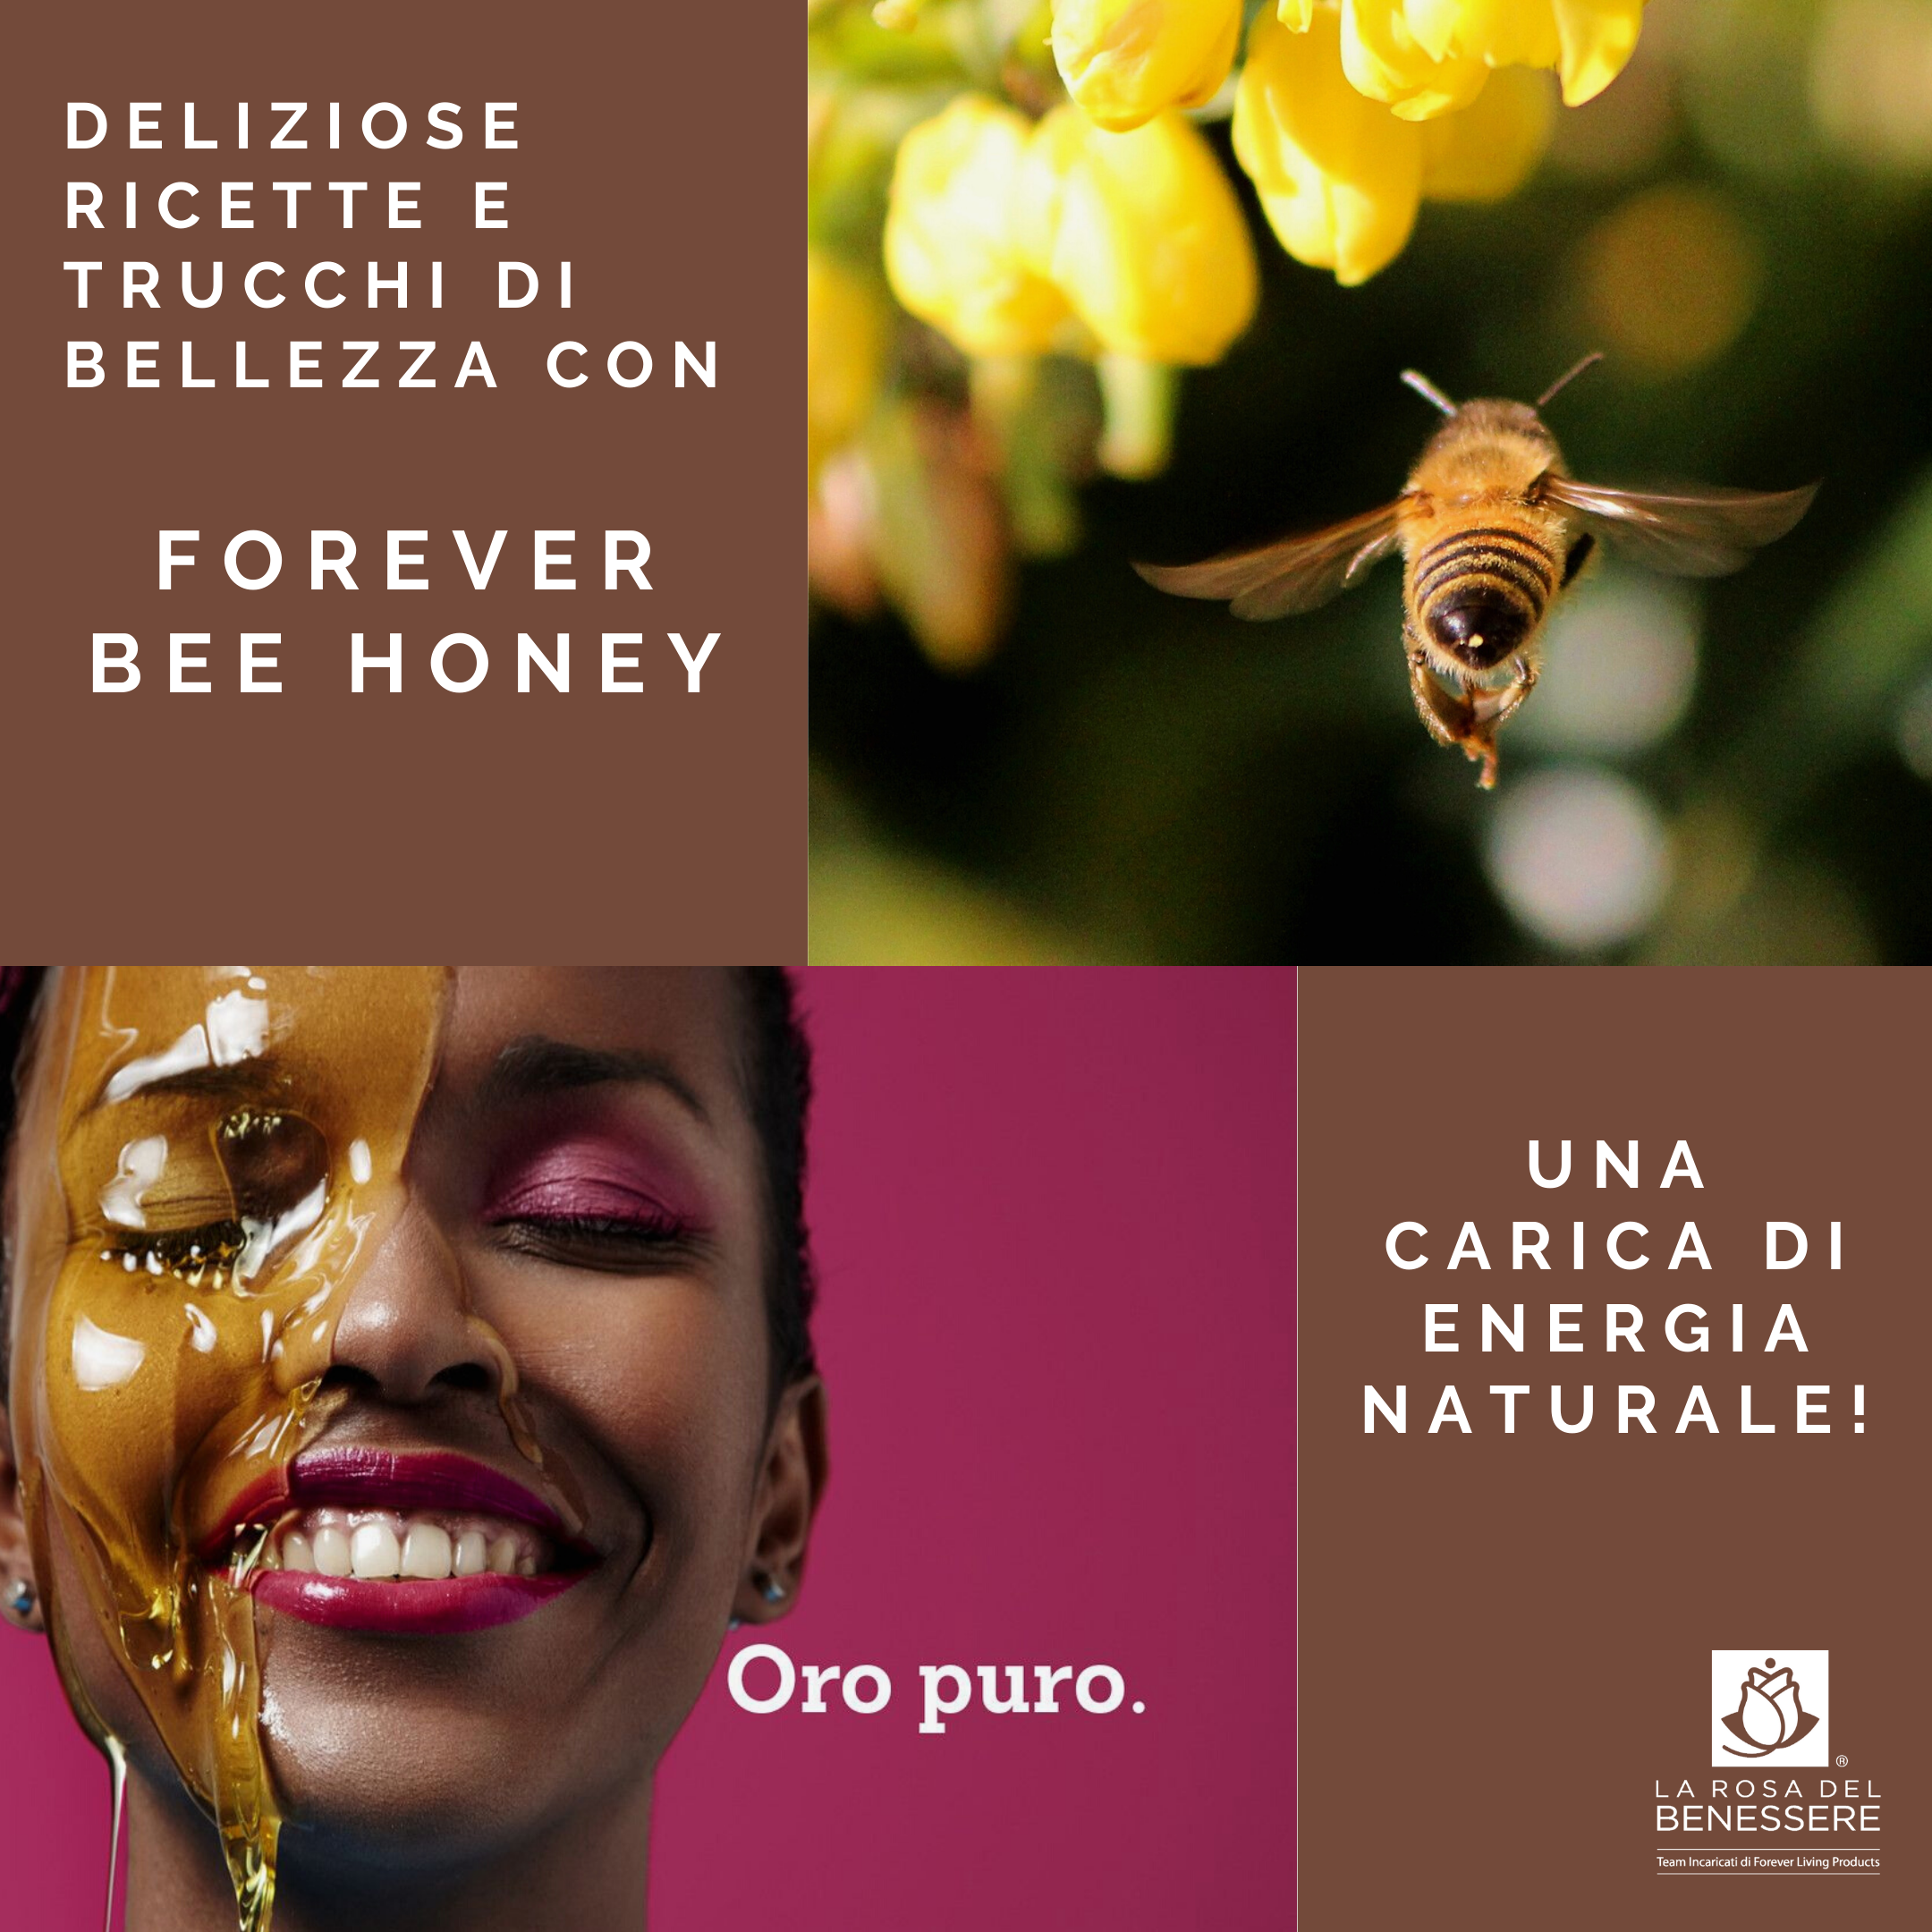 FOREVER BEE HONEY - Il miele d’api, naturalmente dolce e facilmente digeribile - SUCCOALOEVERA - FOREVER LIVING PRODUCTS